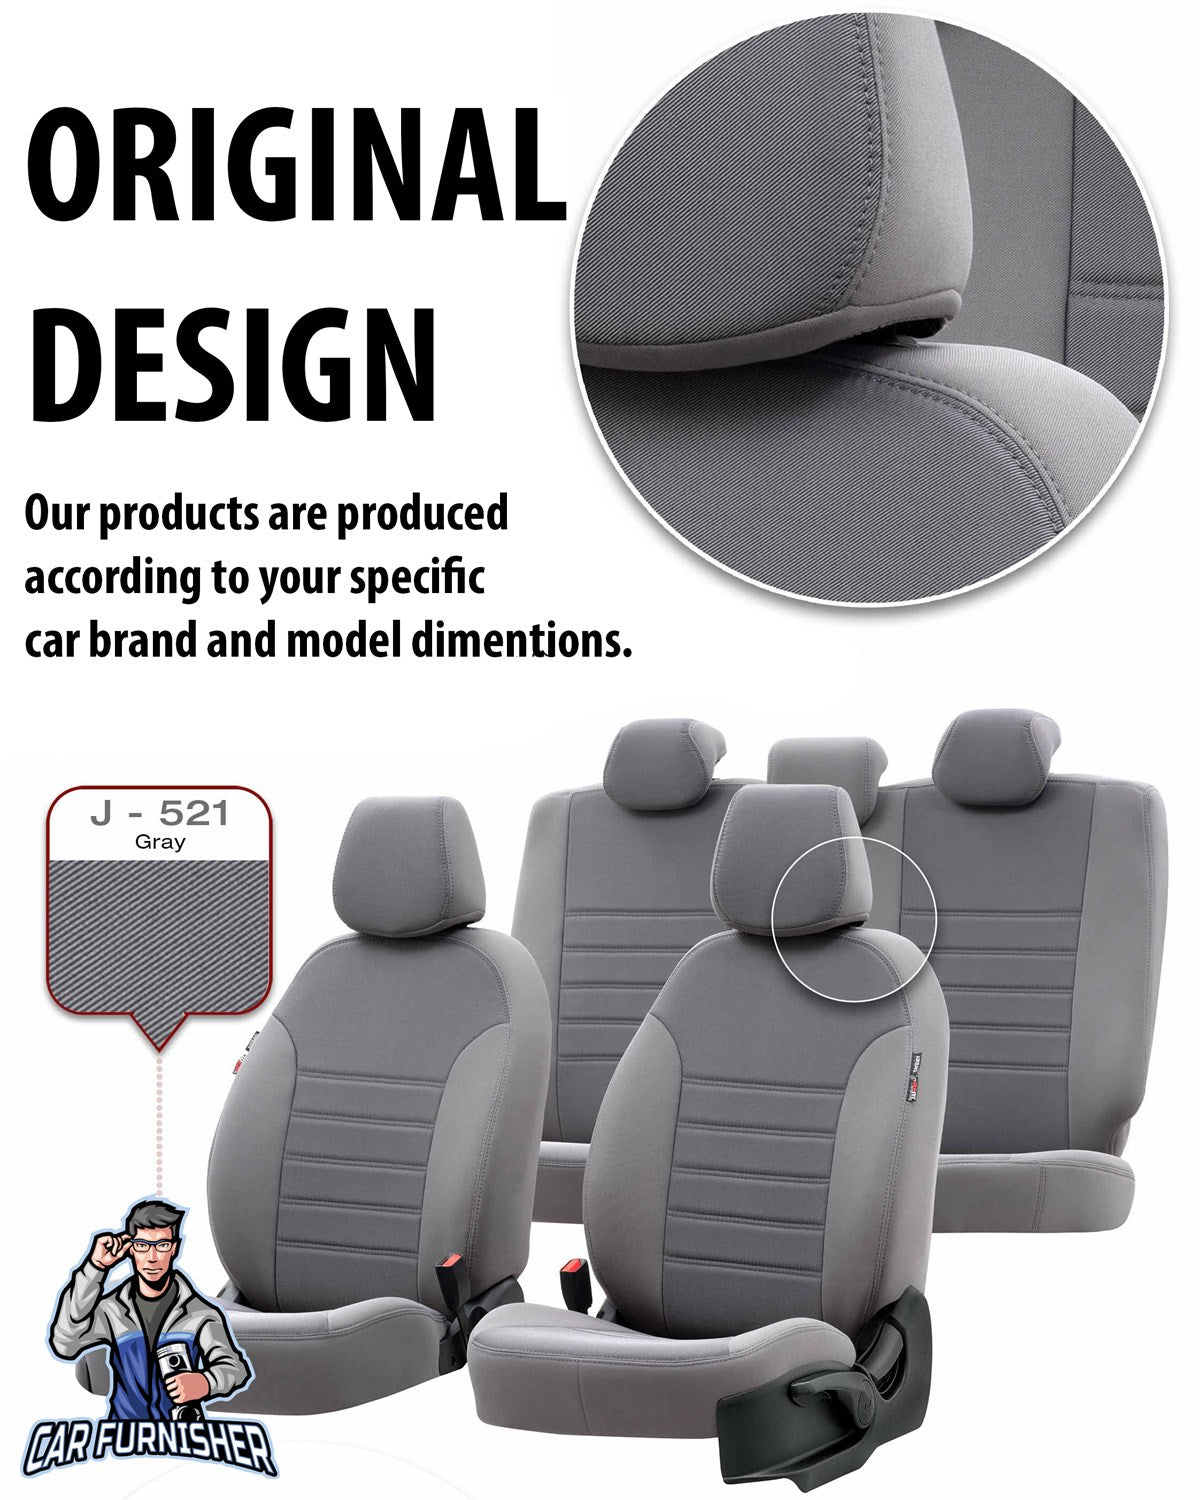 Toyota Yaris Seat Cover Original Jacquard Design Red Jacquard Fabric